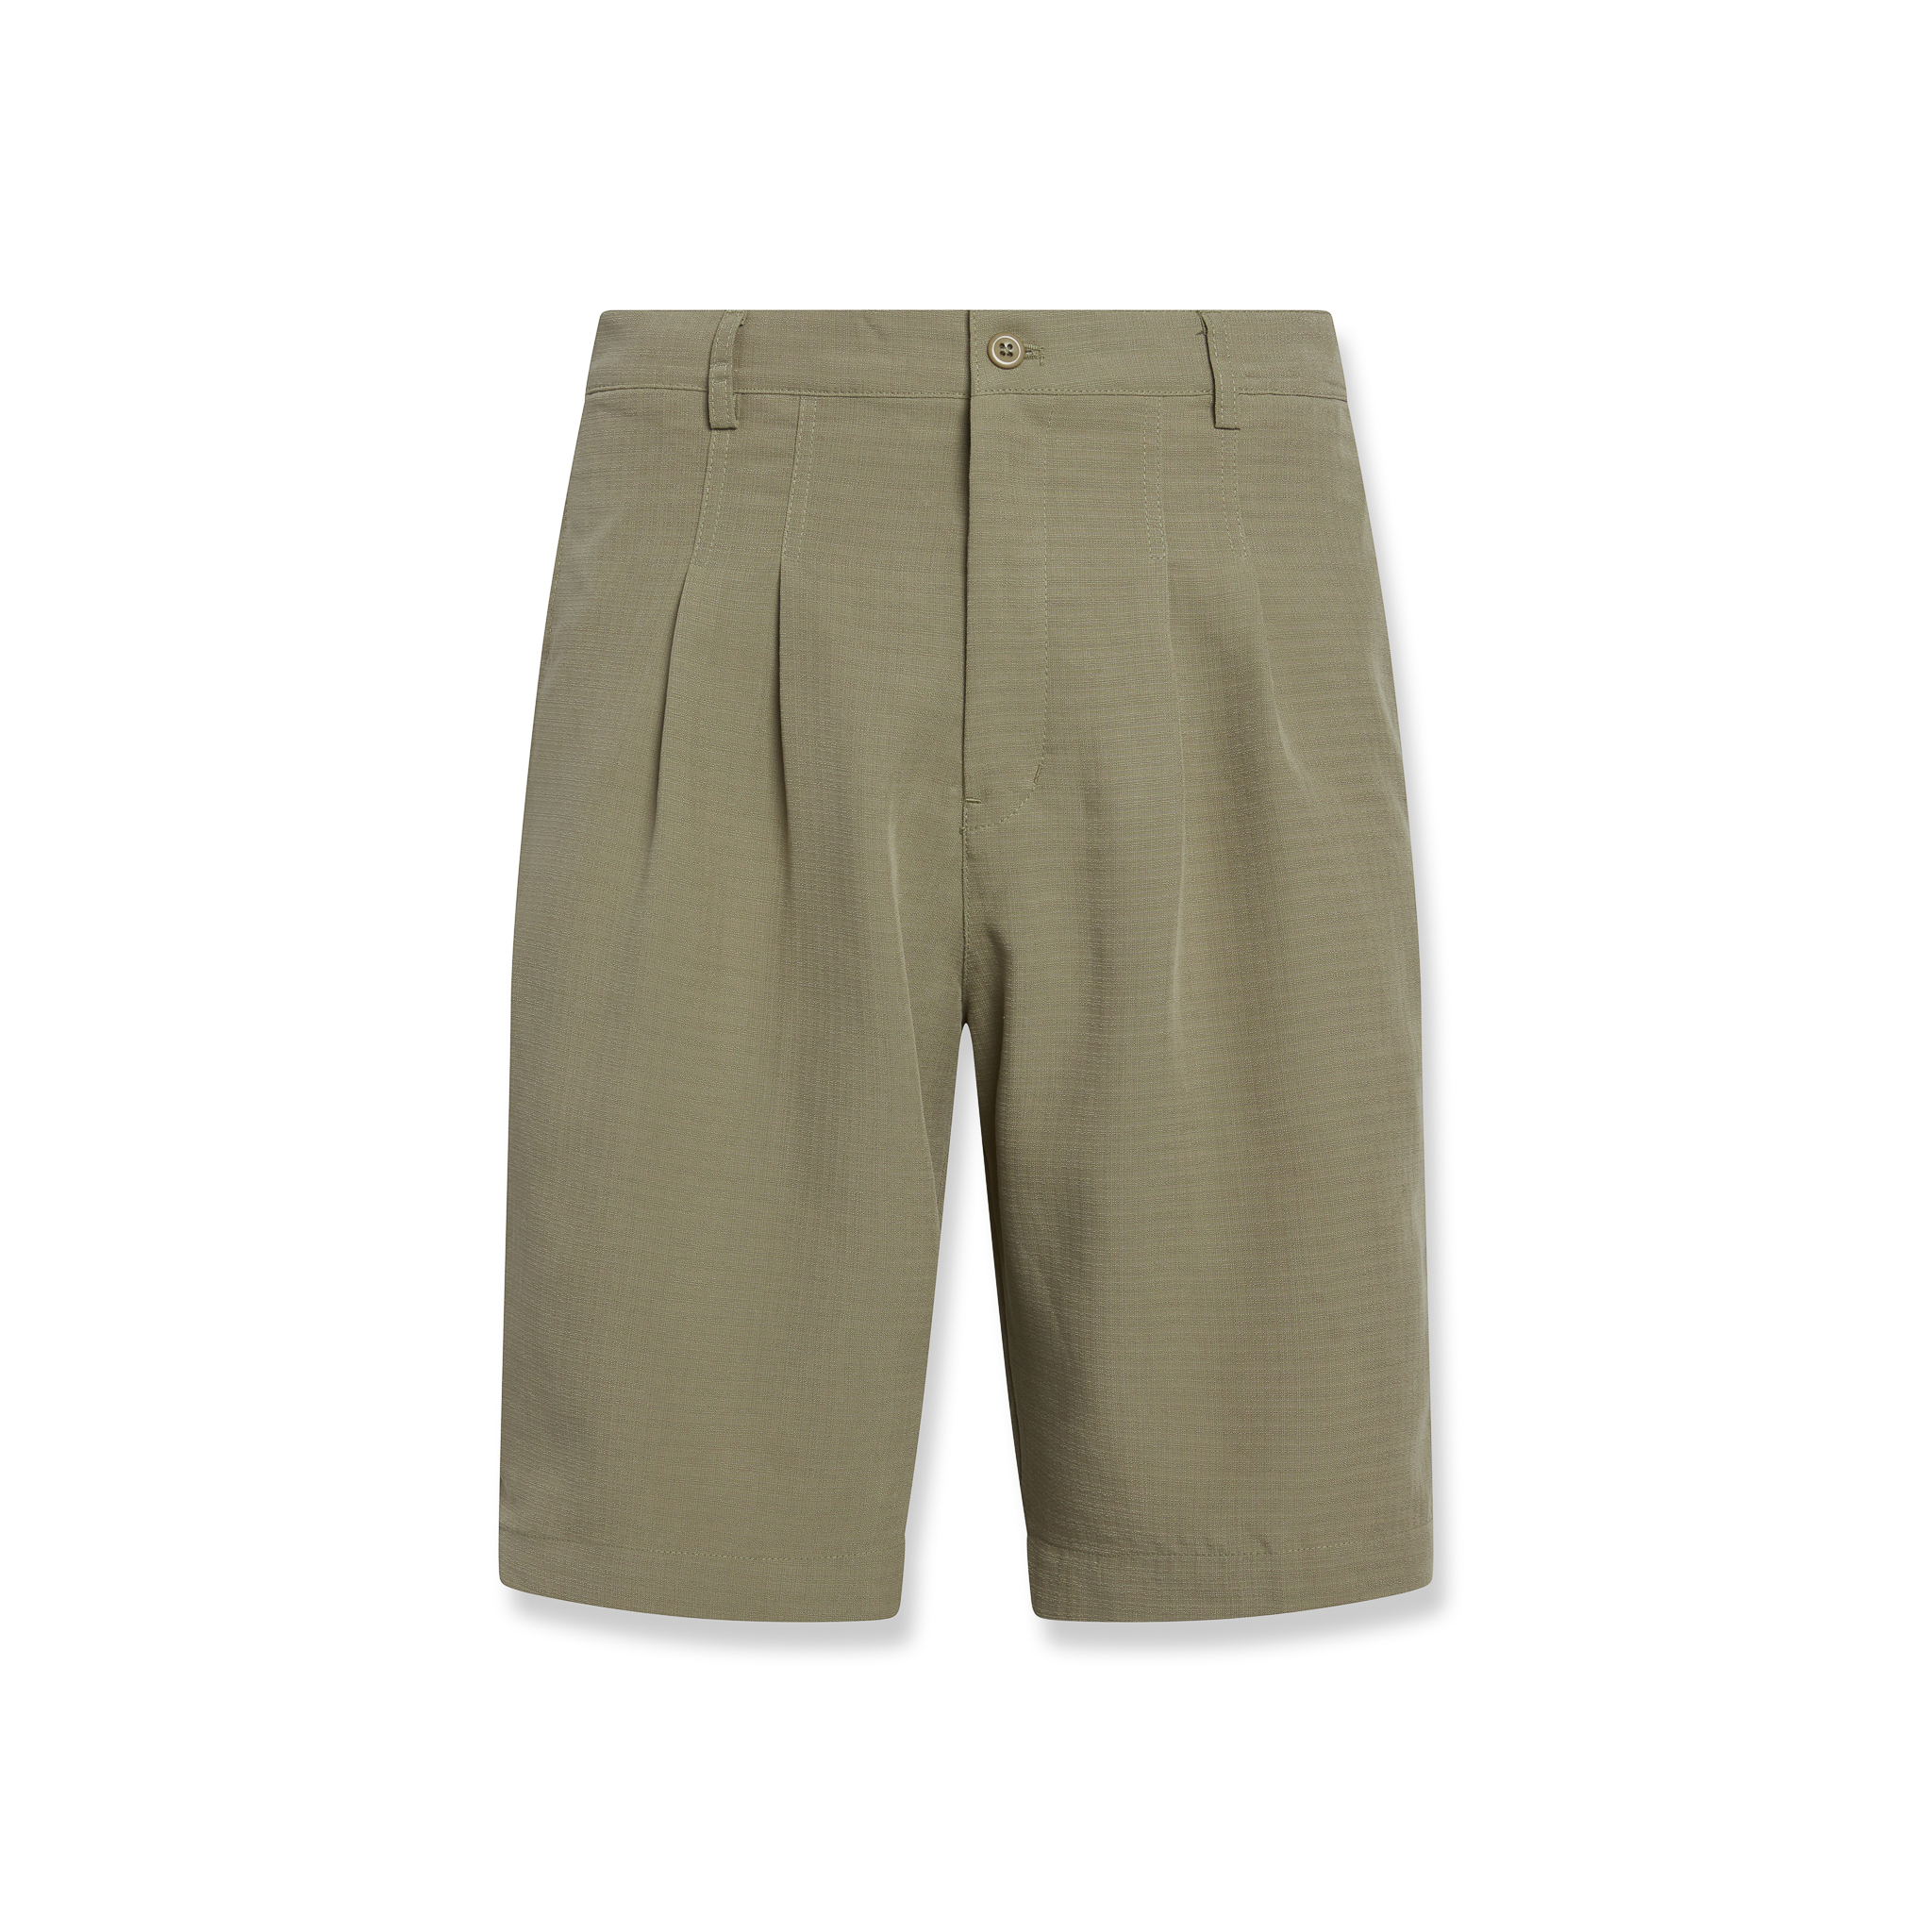 bamboo cay mens shorts island style casual shorts